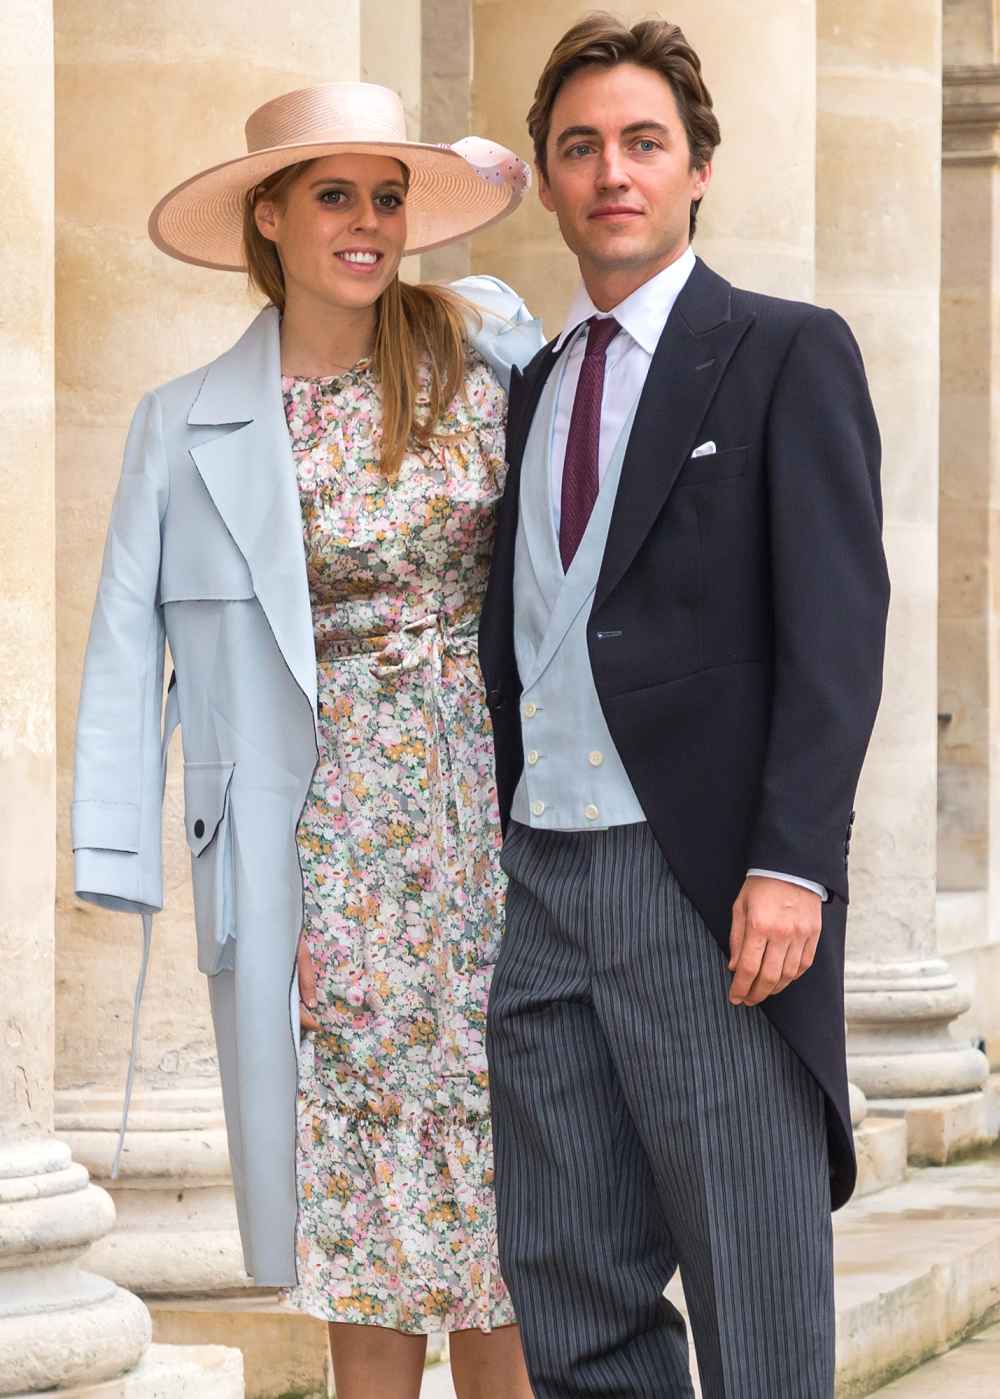 Pregnant Princess Beatrice and Eduardo Mapelli Mozzi Celebrate Their 1st Anniversary